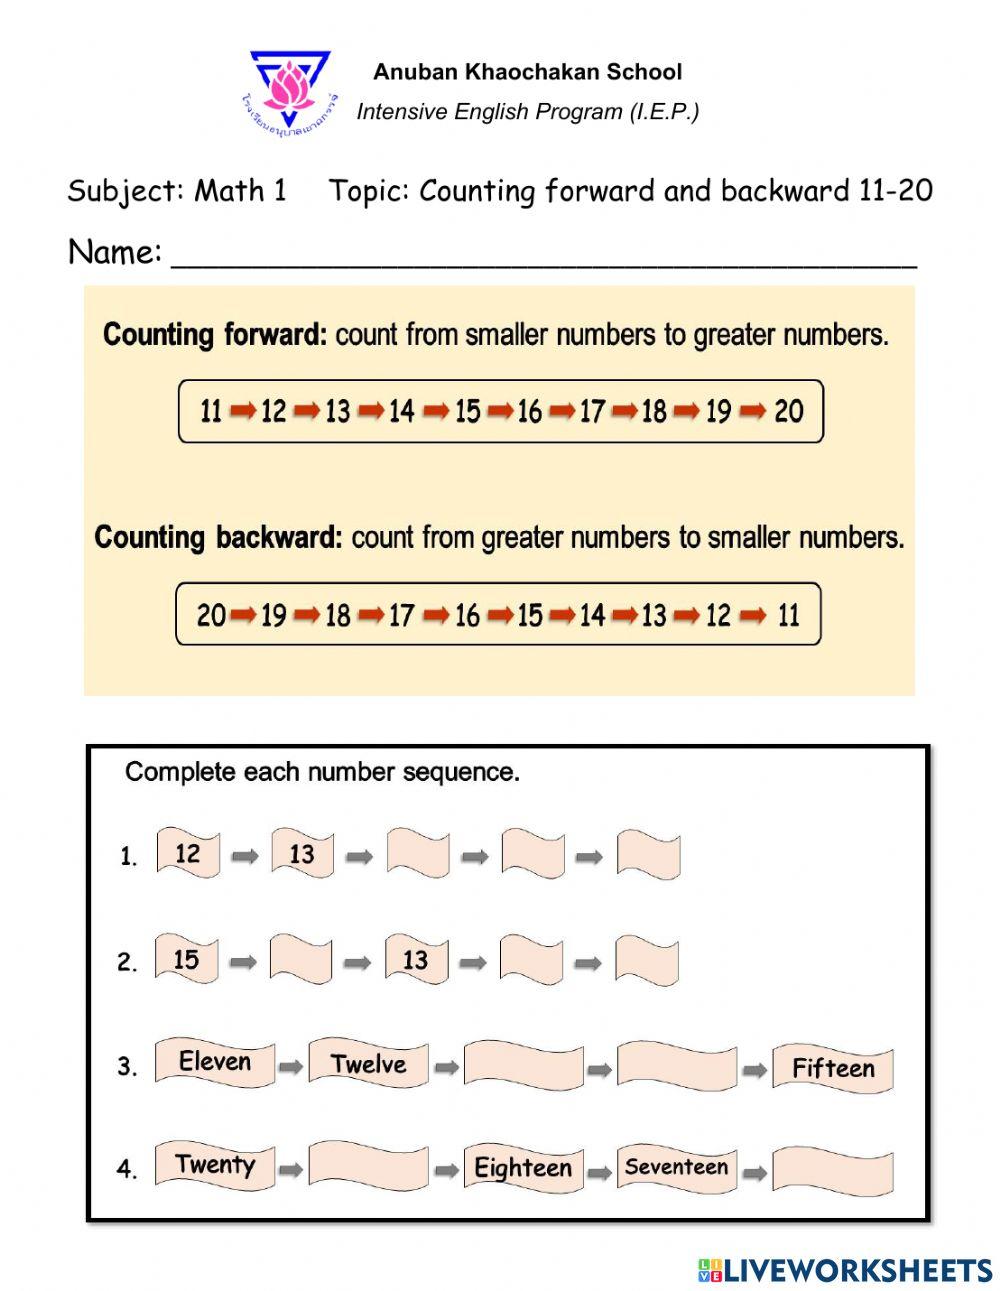 Counting numbers forward and backward (11-20)